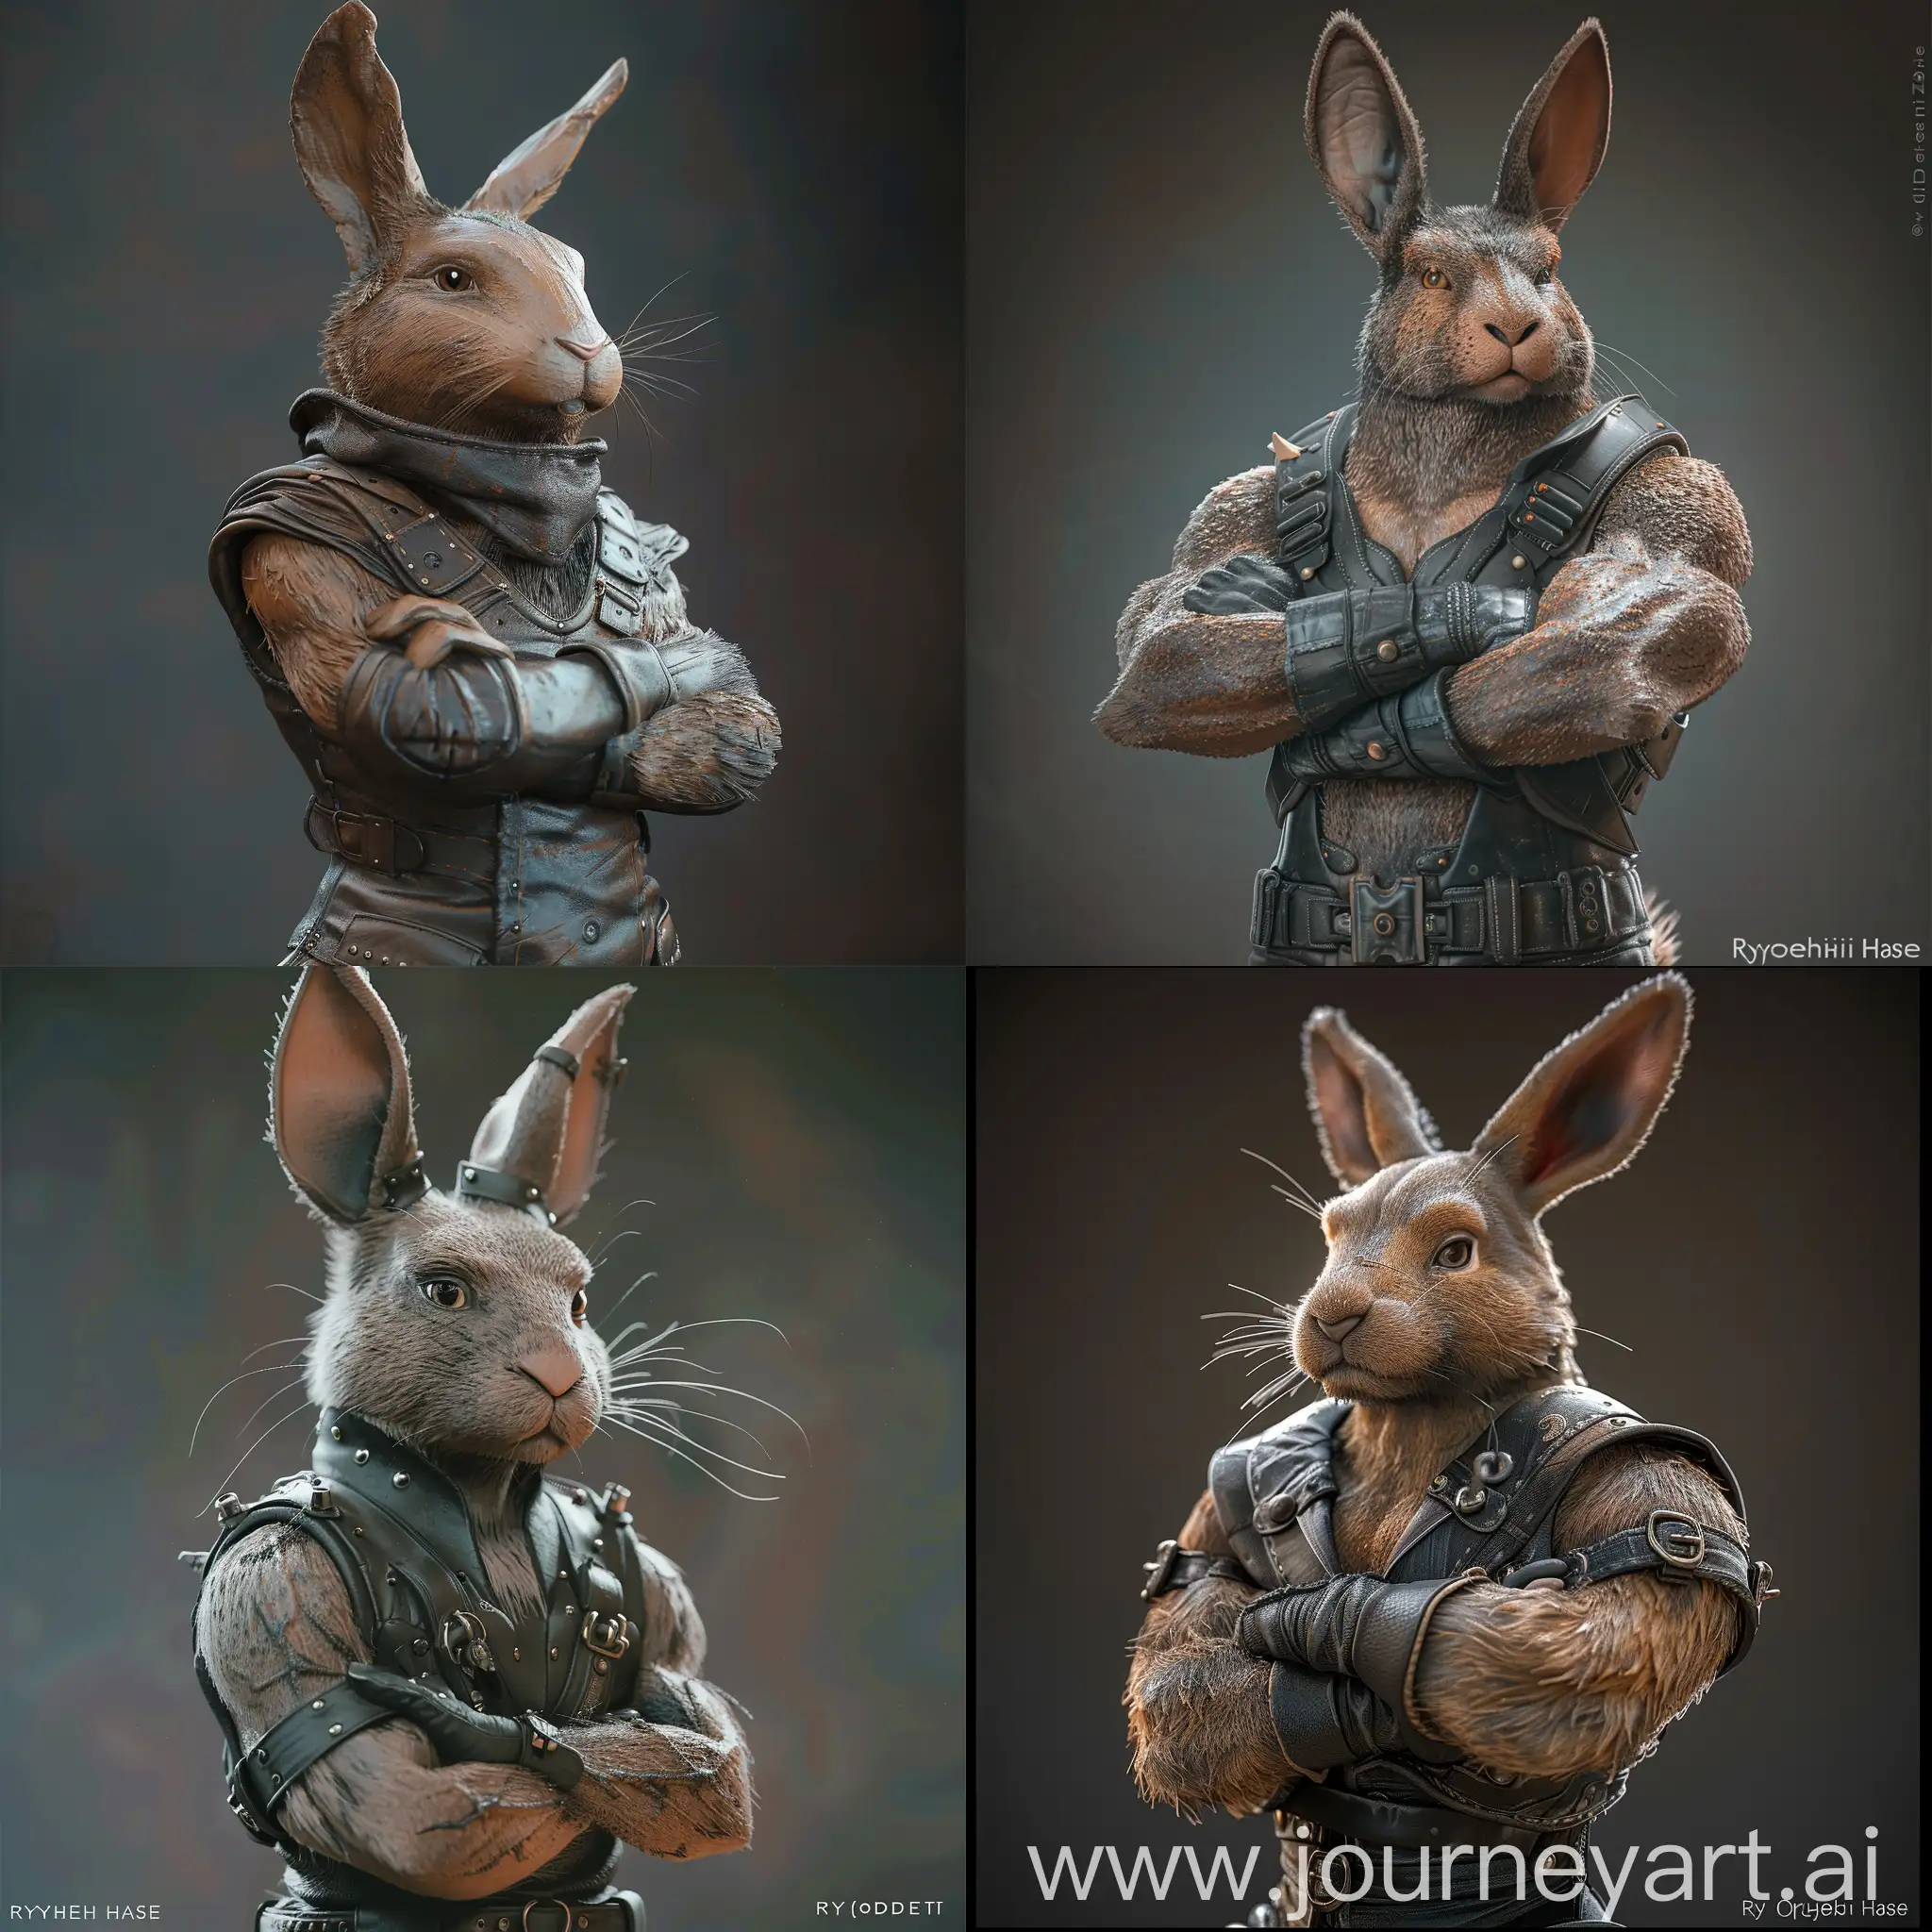 CrossArmed-Rabbit-in-Leather-Attire-Hyper-Realistic-Furry-Art